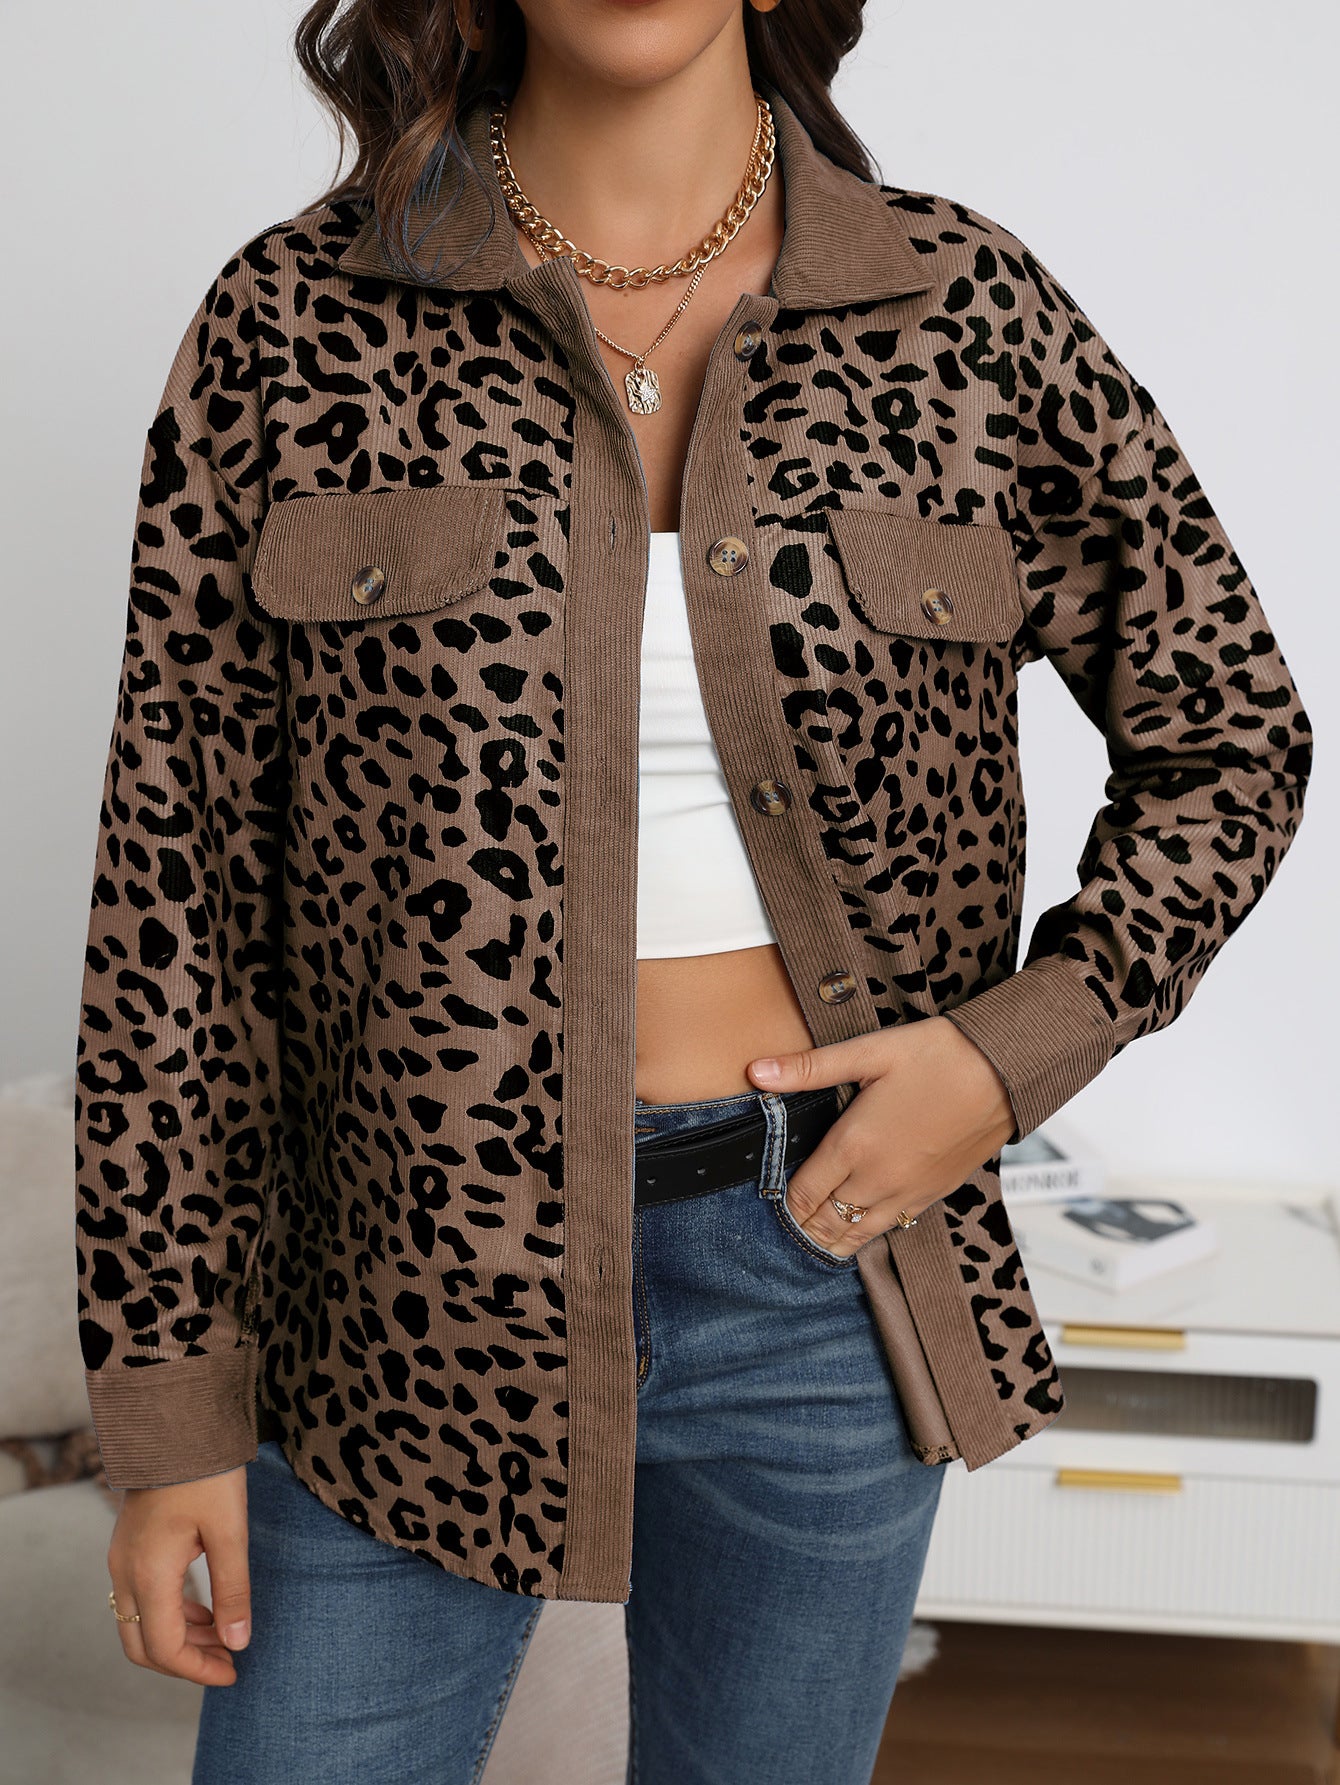 Leopard Print Shirt Coat Fashion Button Long Sleeve Jacket Women